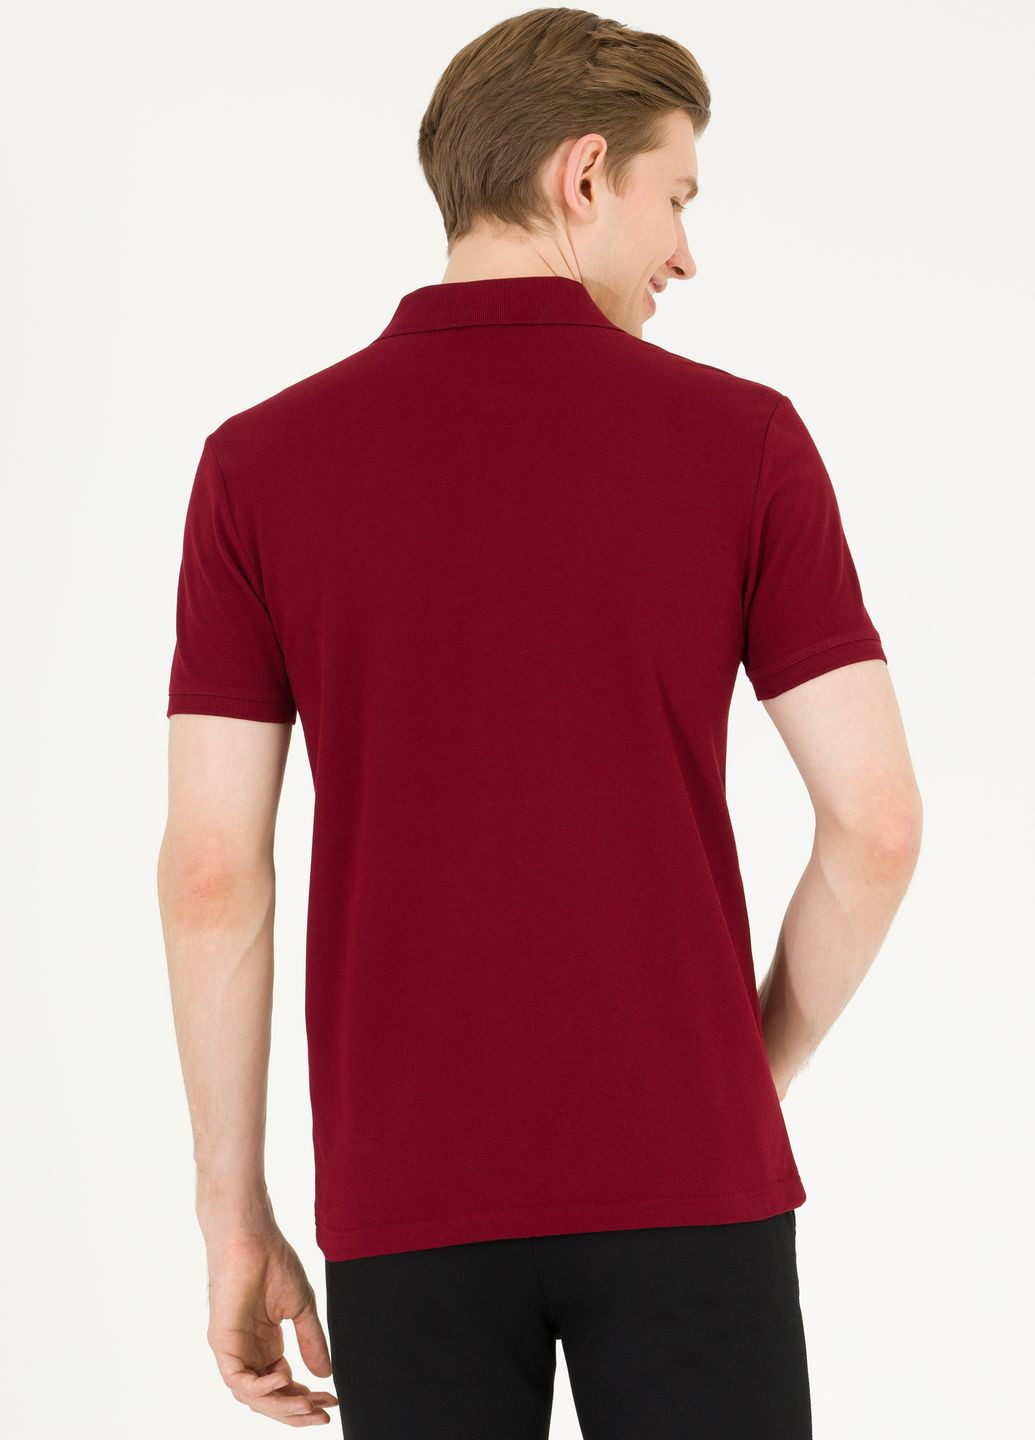 Красная футболка-футболка поло мужская для мужчин U.S. Polo Assn.